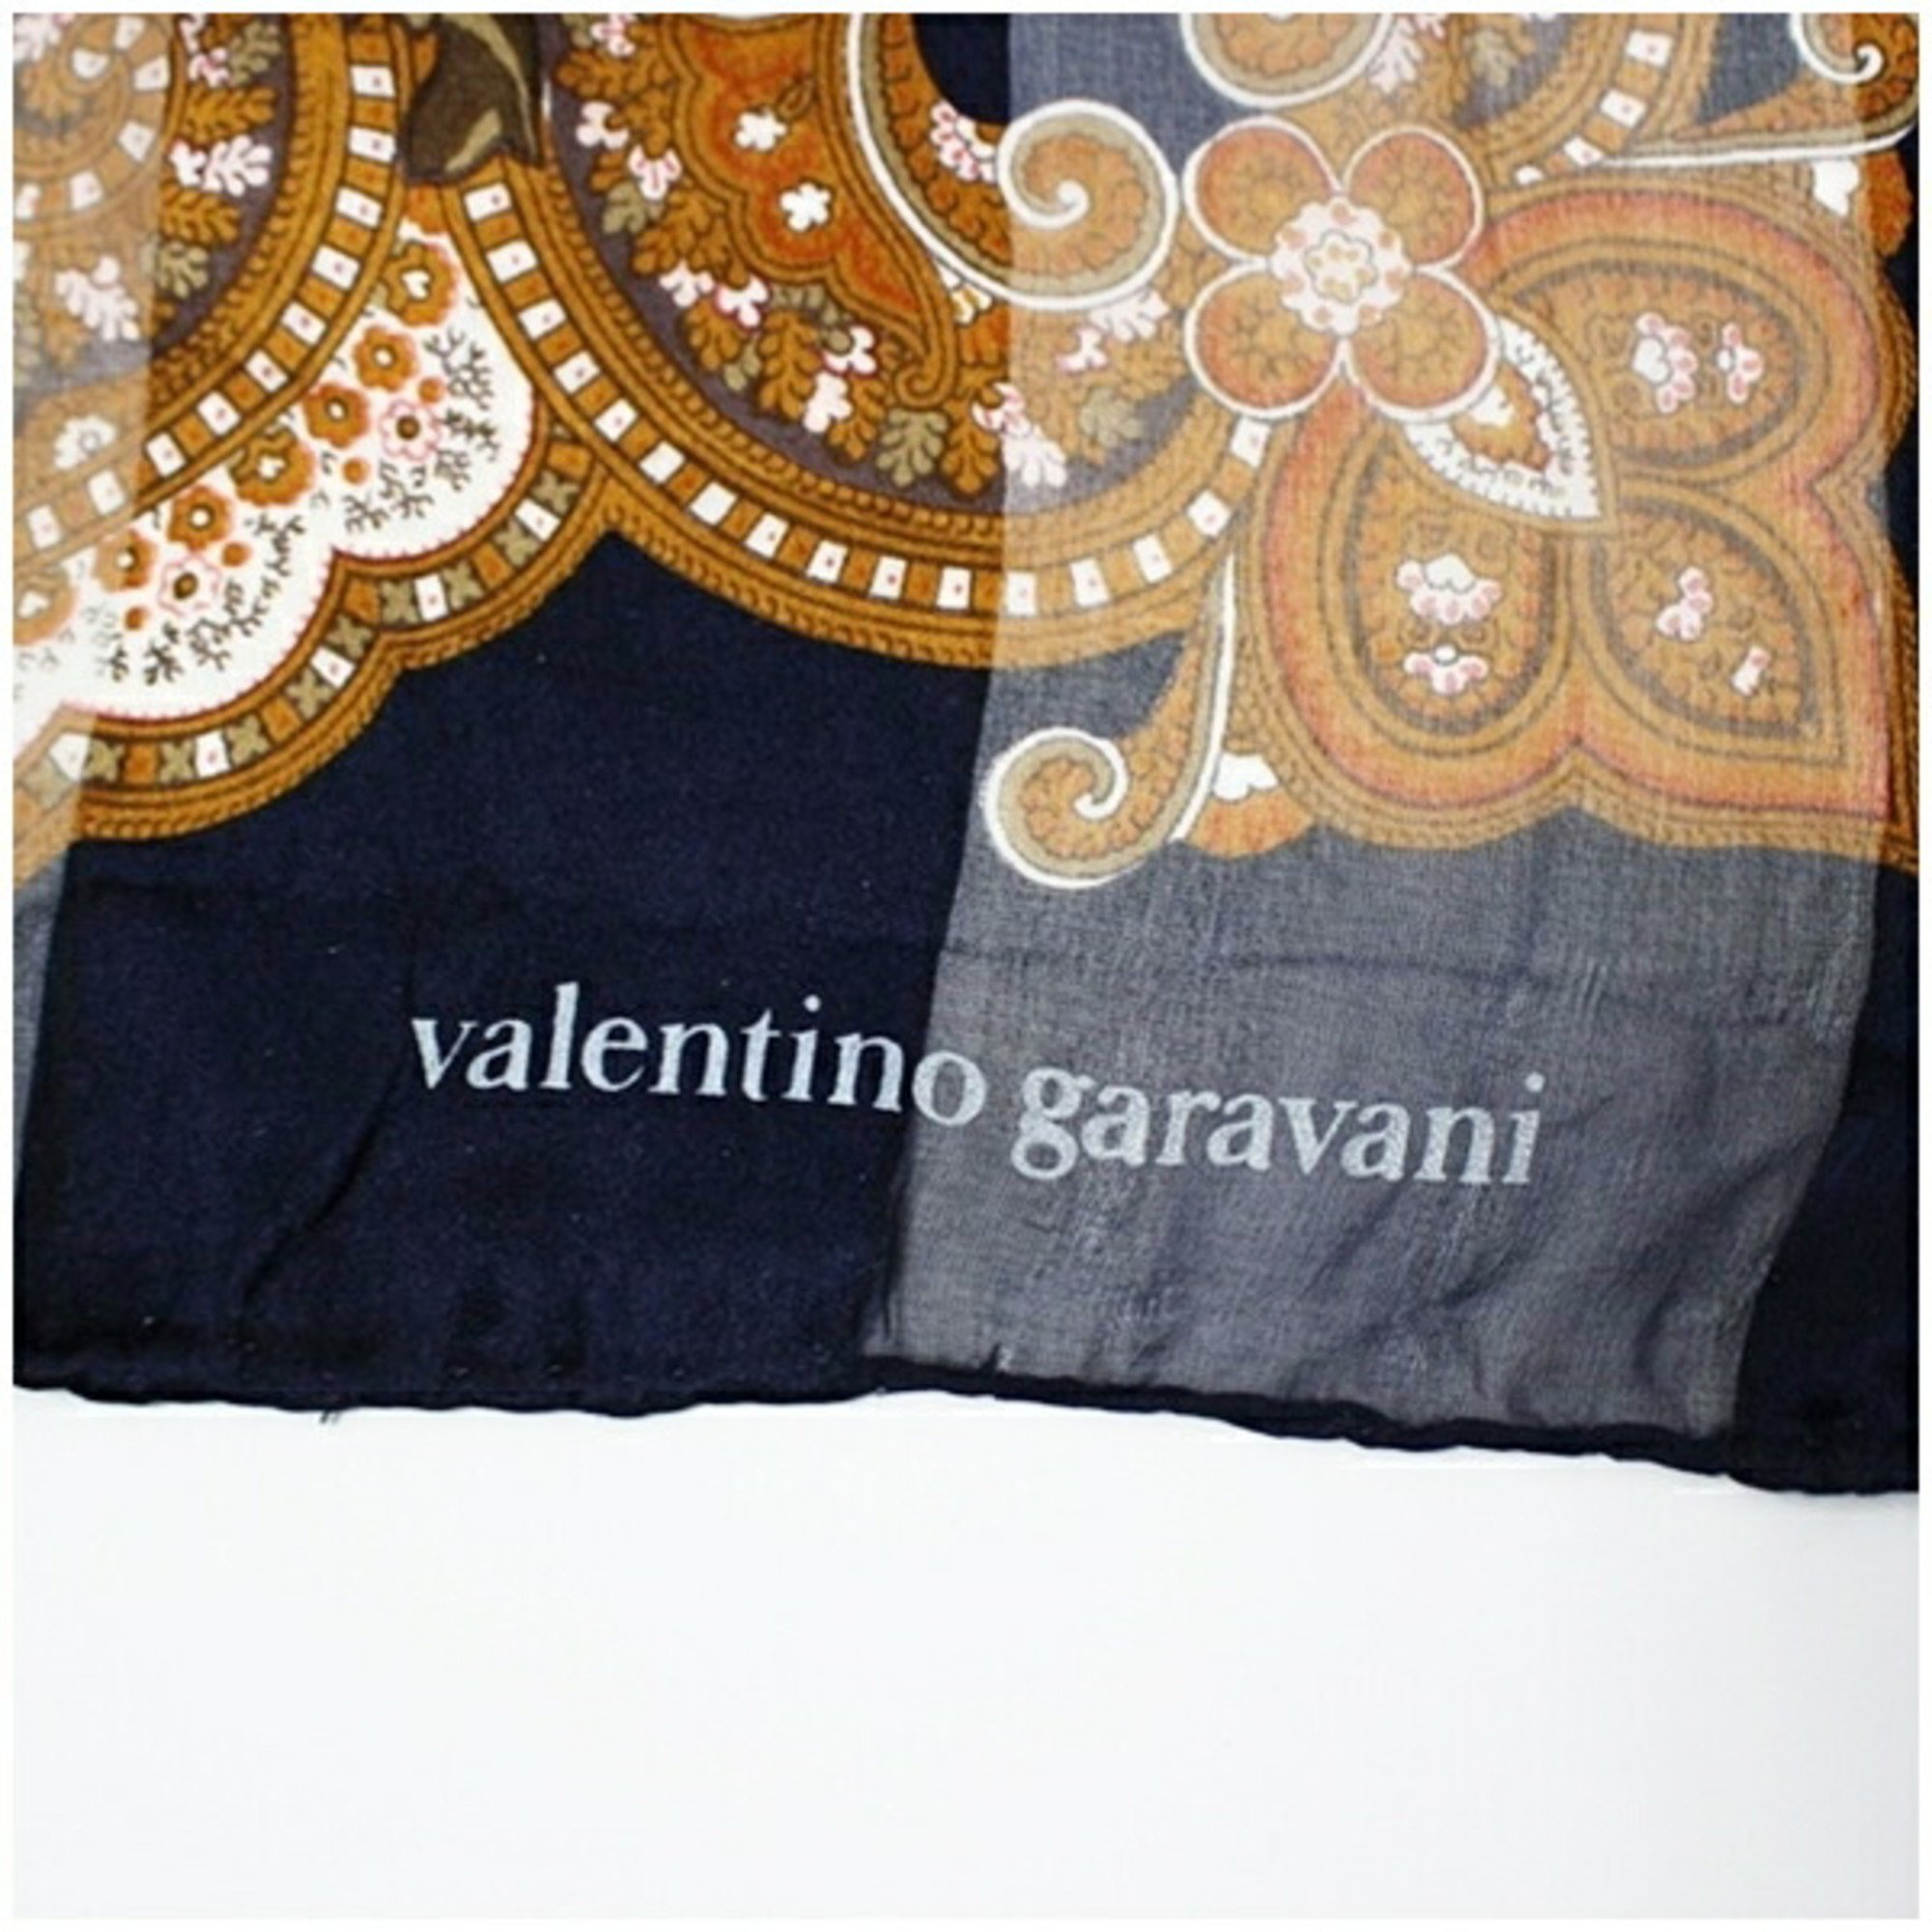 Valentino Garavani Large Silk Scarf Muffler Stole Navy VALENTINO GARAVANI Women's